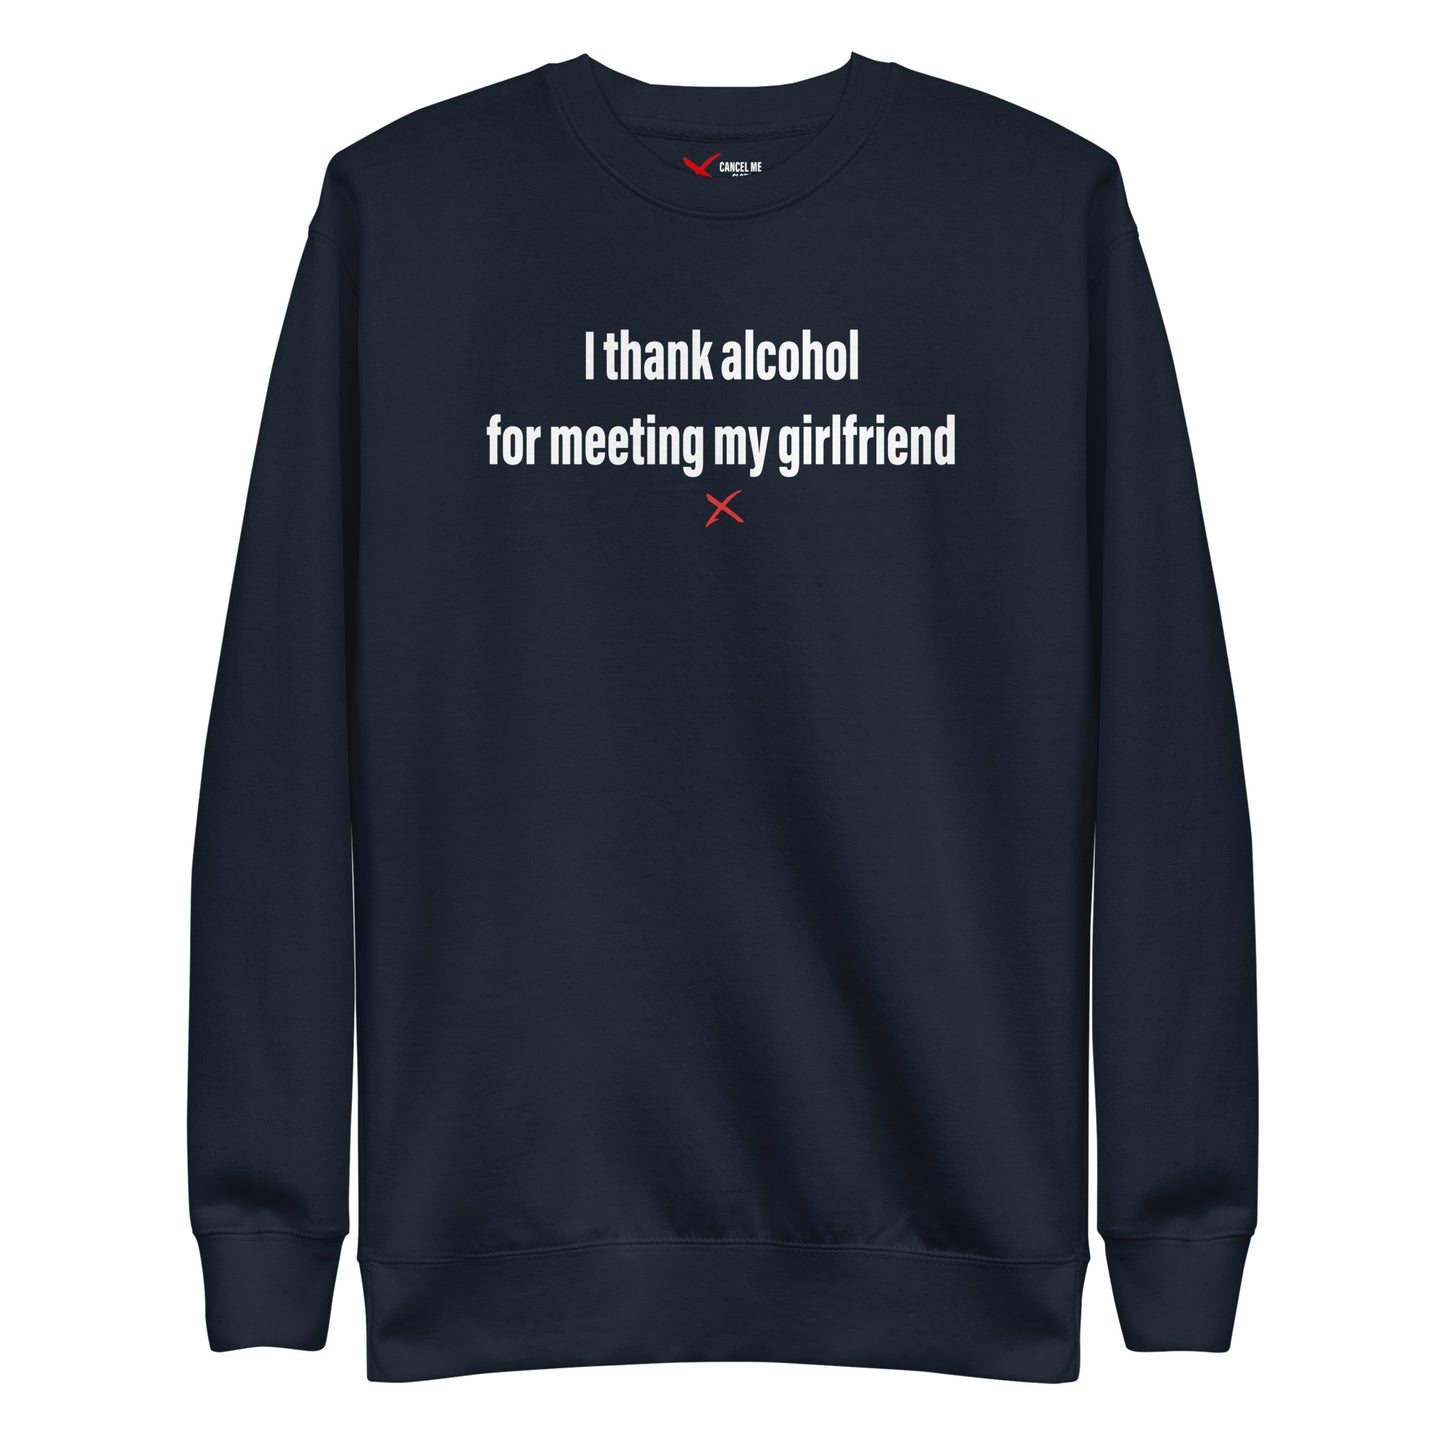 I thank alcohol for meeting my girlfriend - Sweatshirt